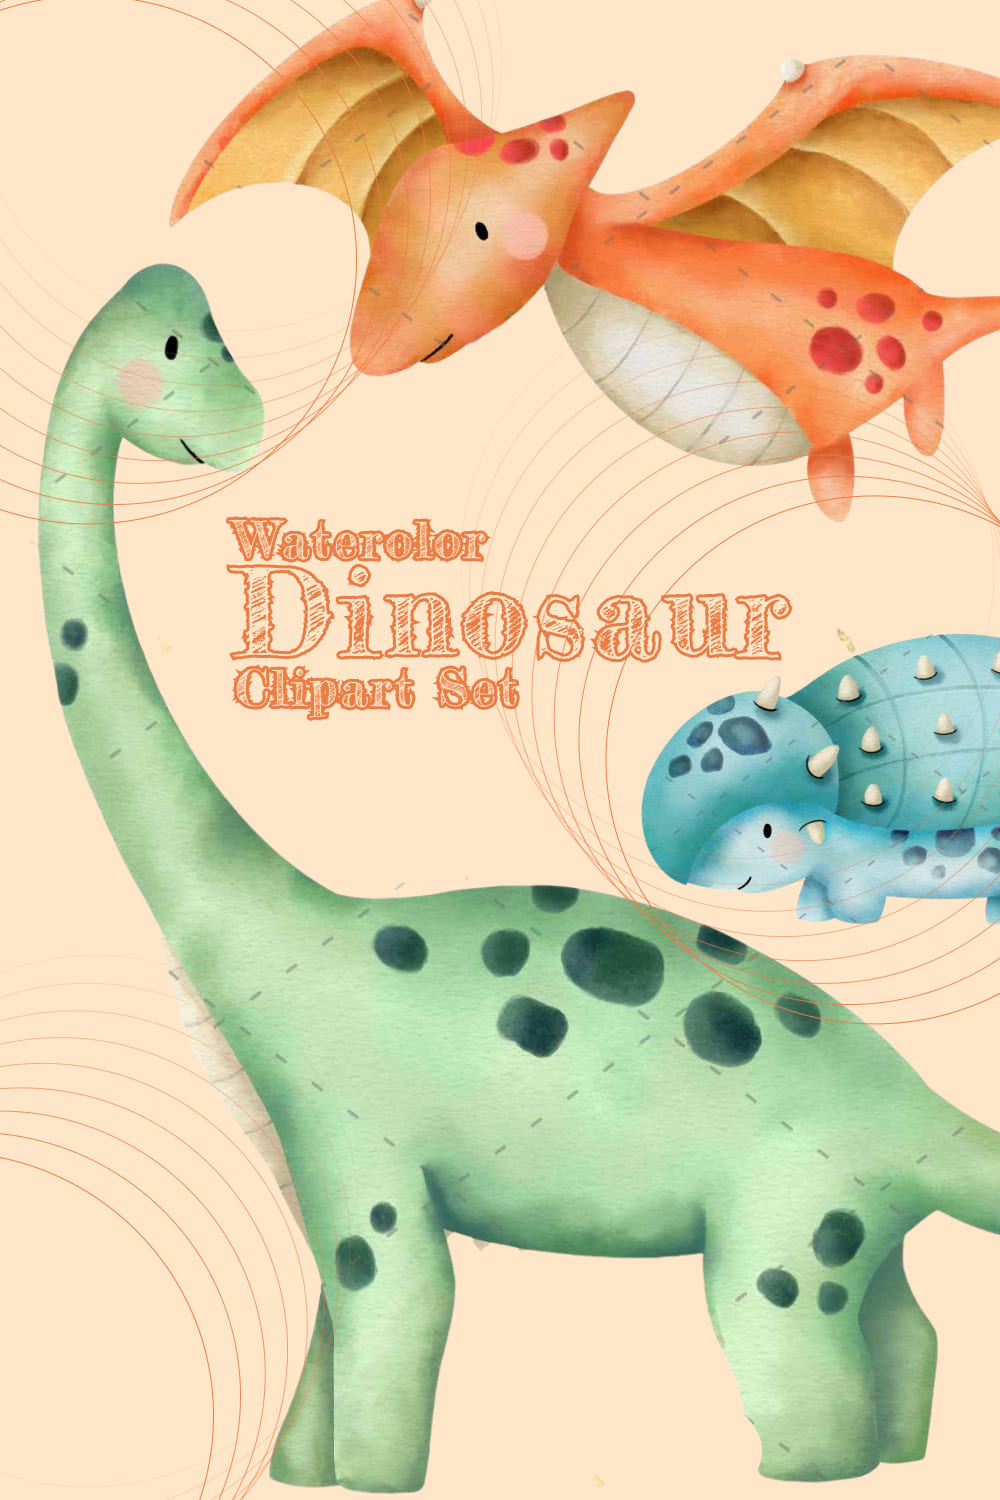 Waterolor Dinosaur Clipart Set pinterest image.